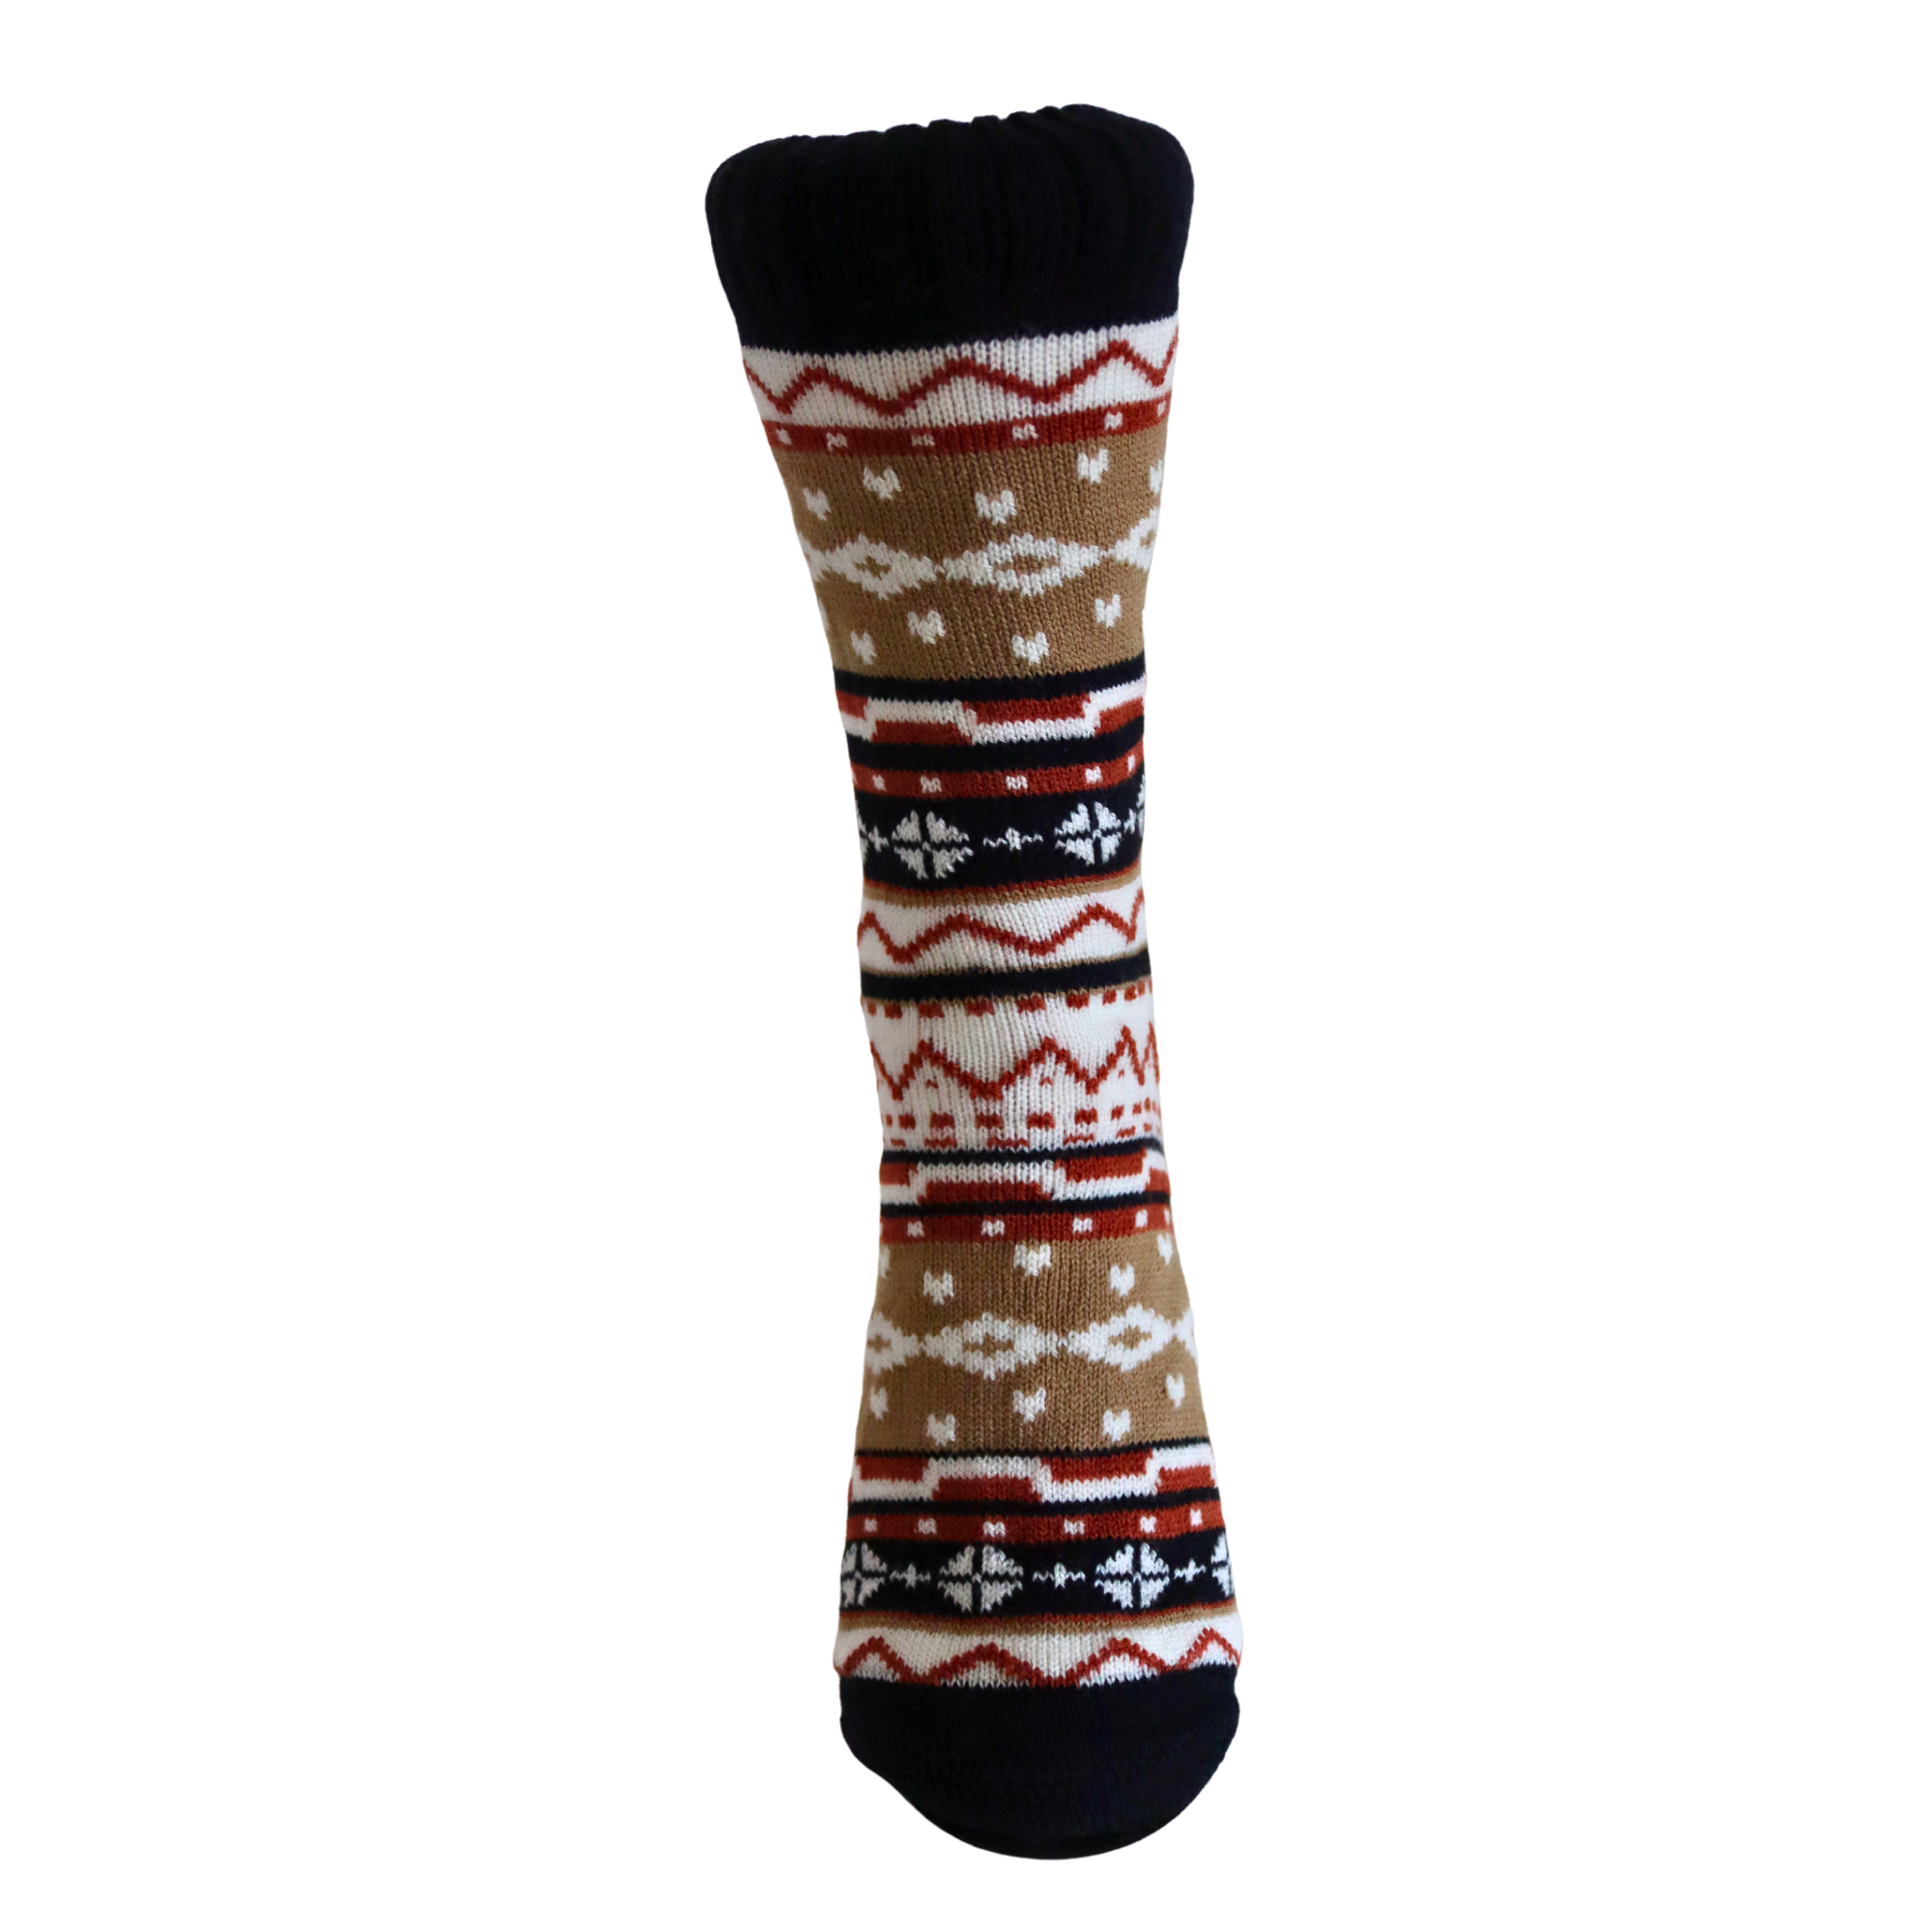 Louluu Women Black Colour Nordic Design Socks